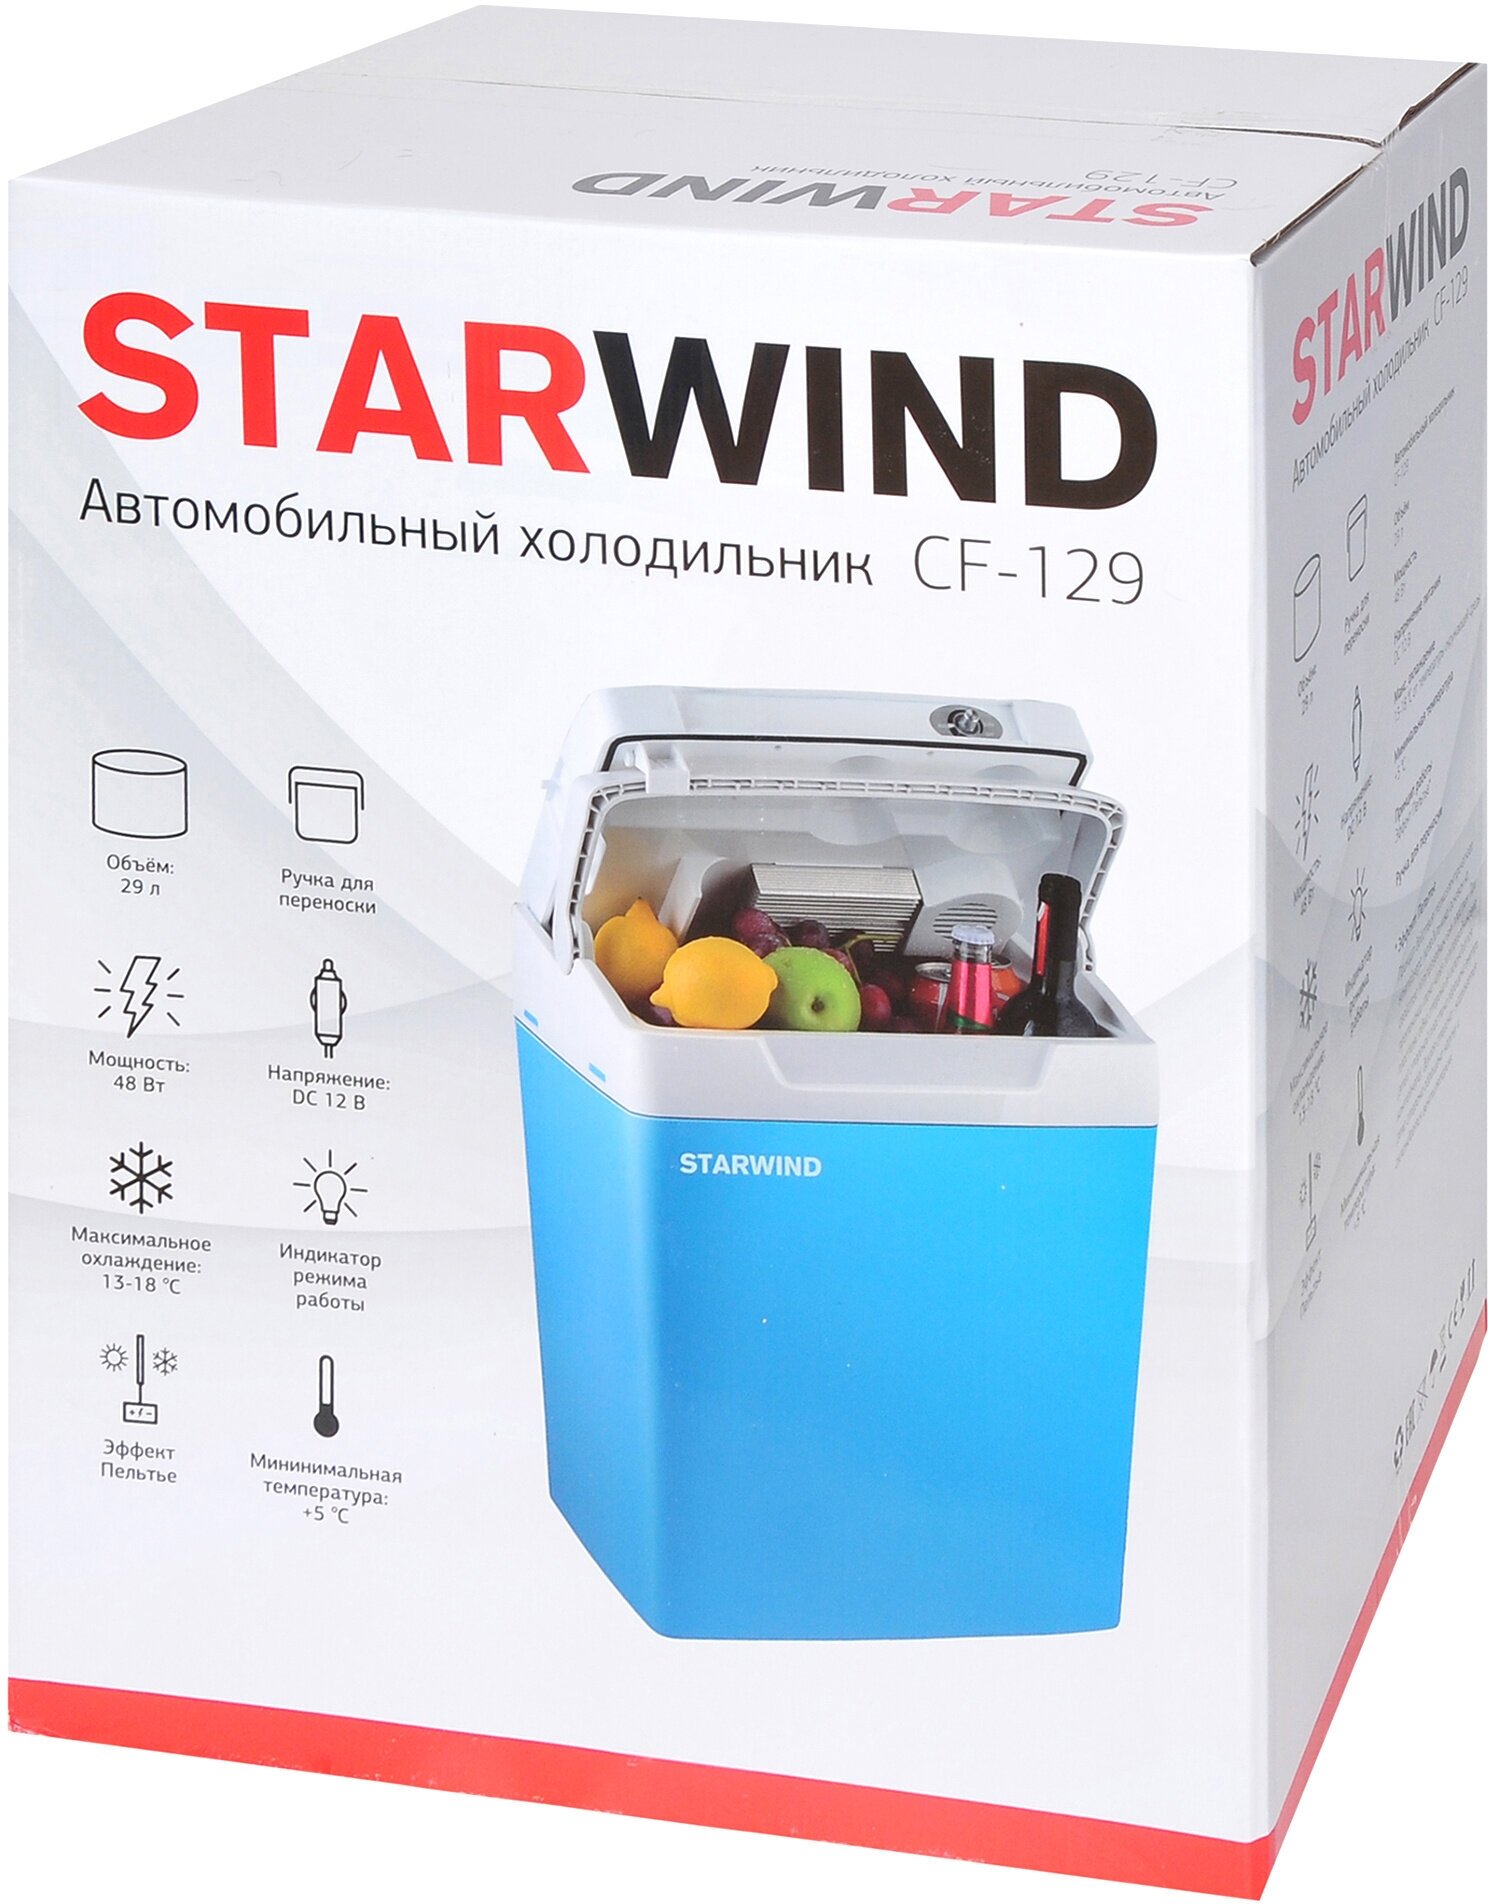 Автомобильный холодильник Starwind CF-129 (синий)